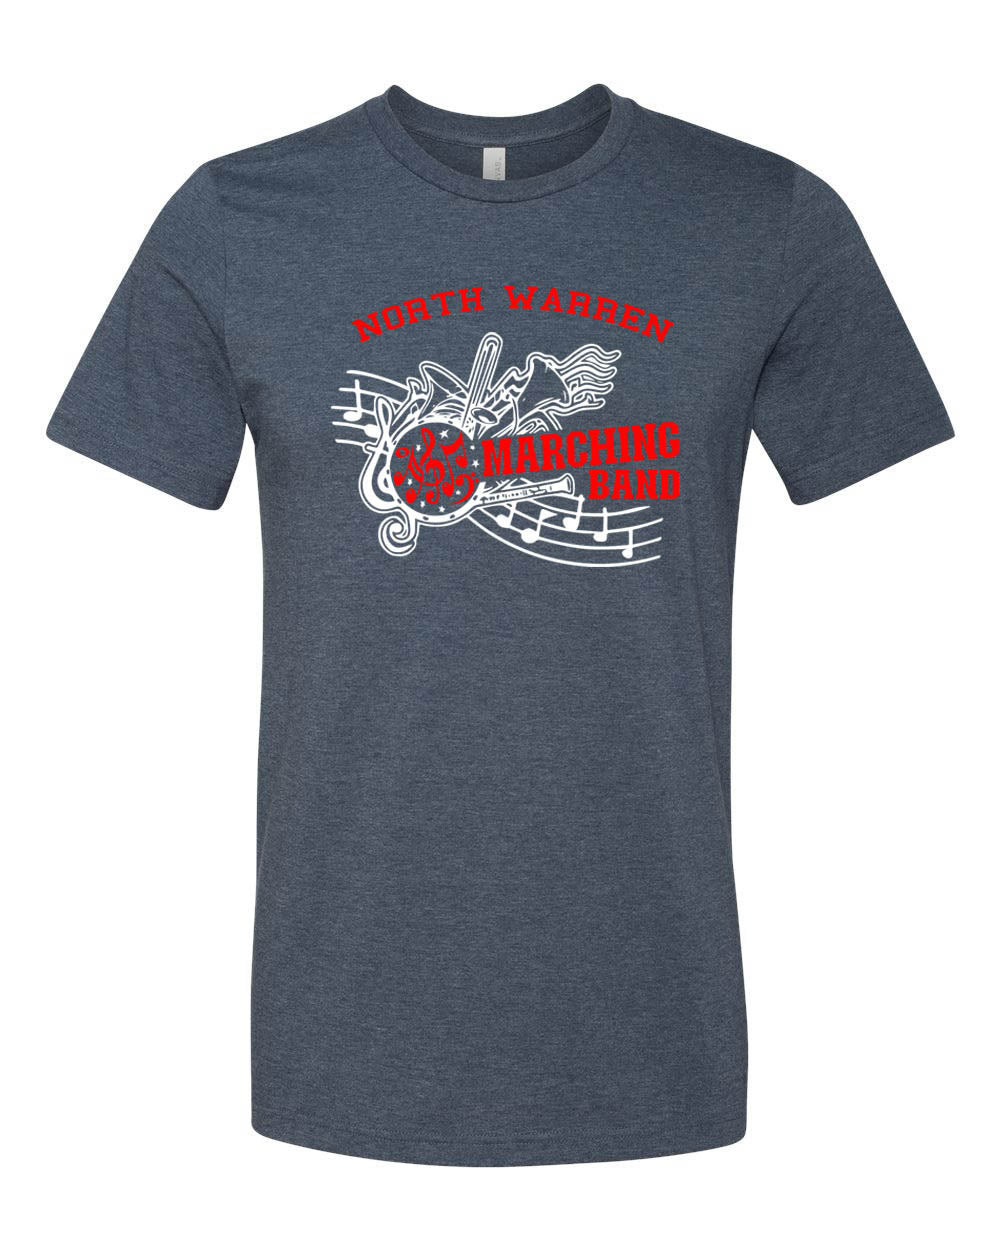 North Warren Marching Band Design 1 T-Shirt